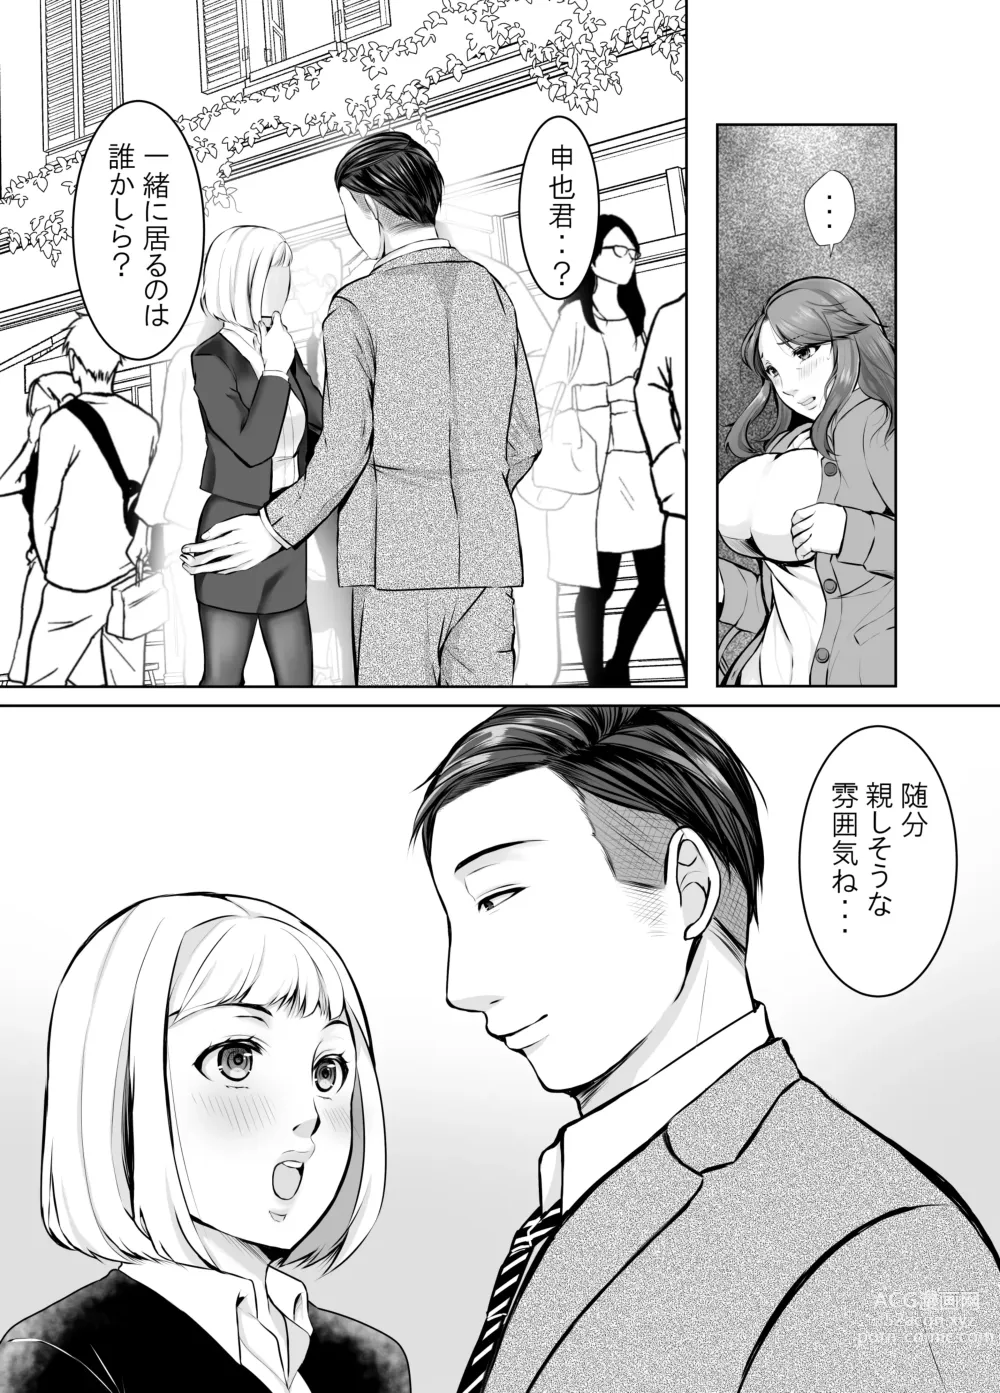 Page 7 of doujinshi Musumemuko ni Ochita Haha